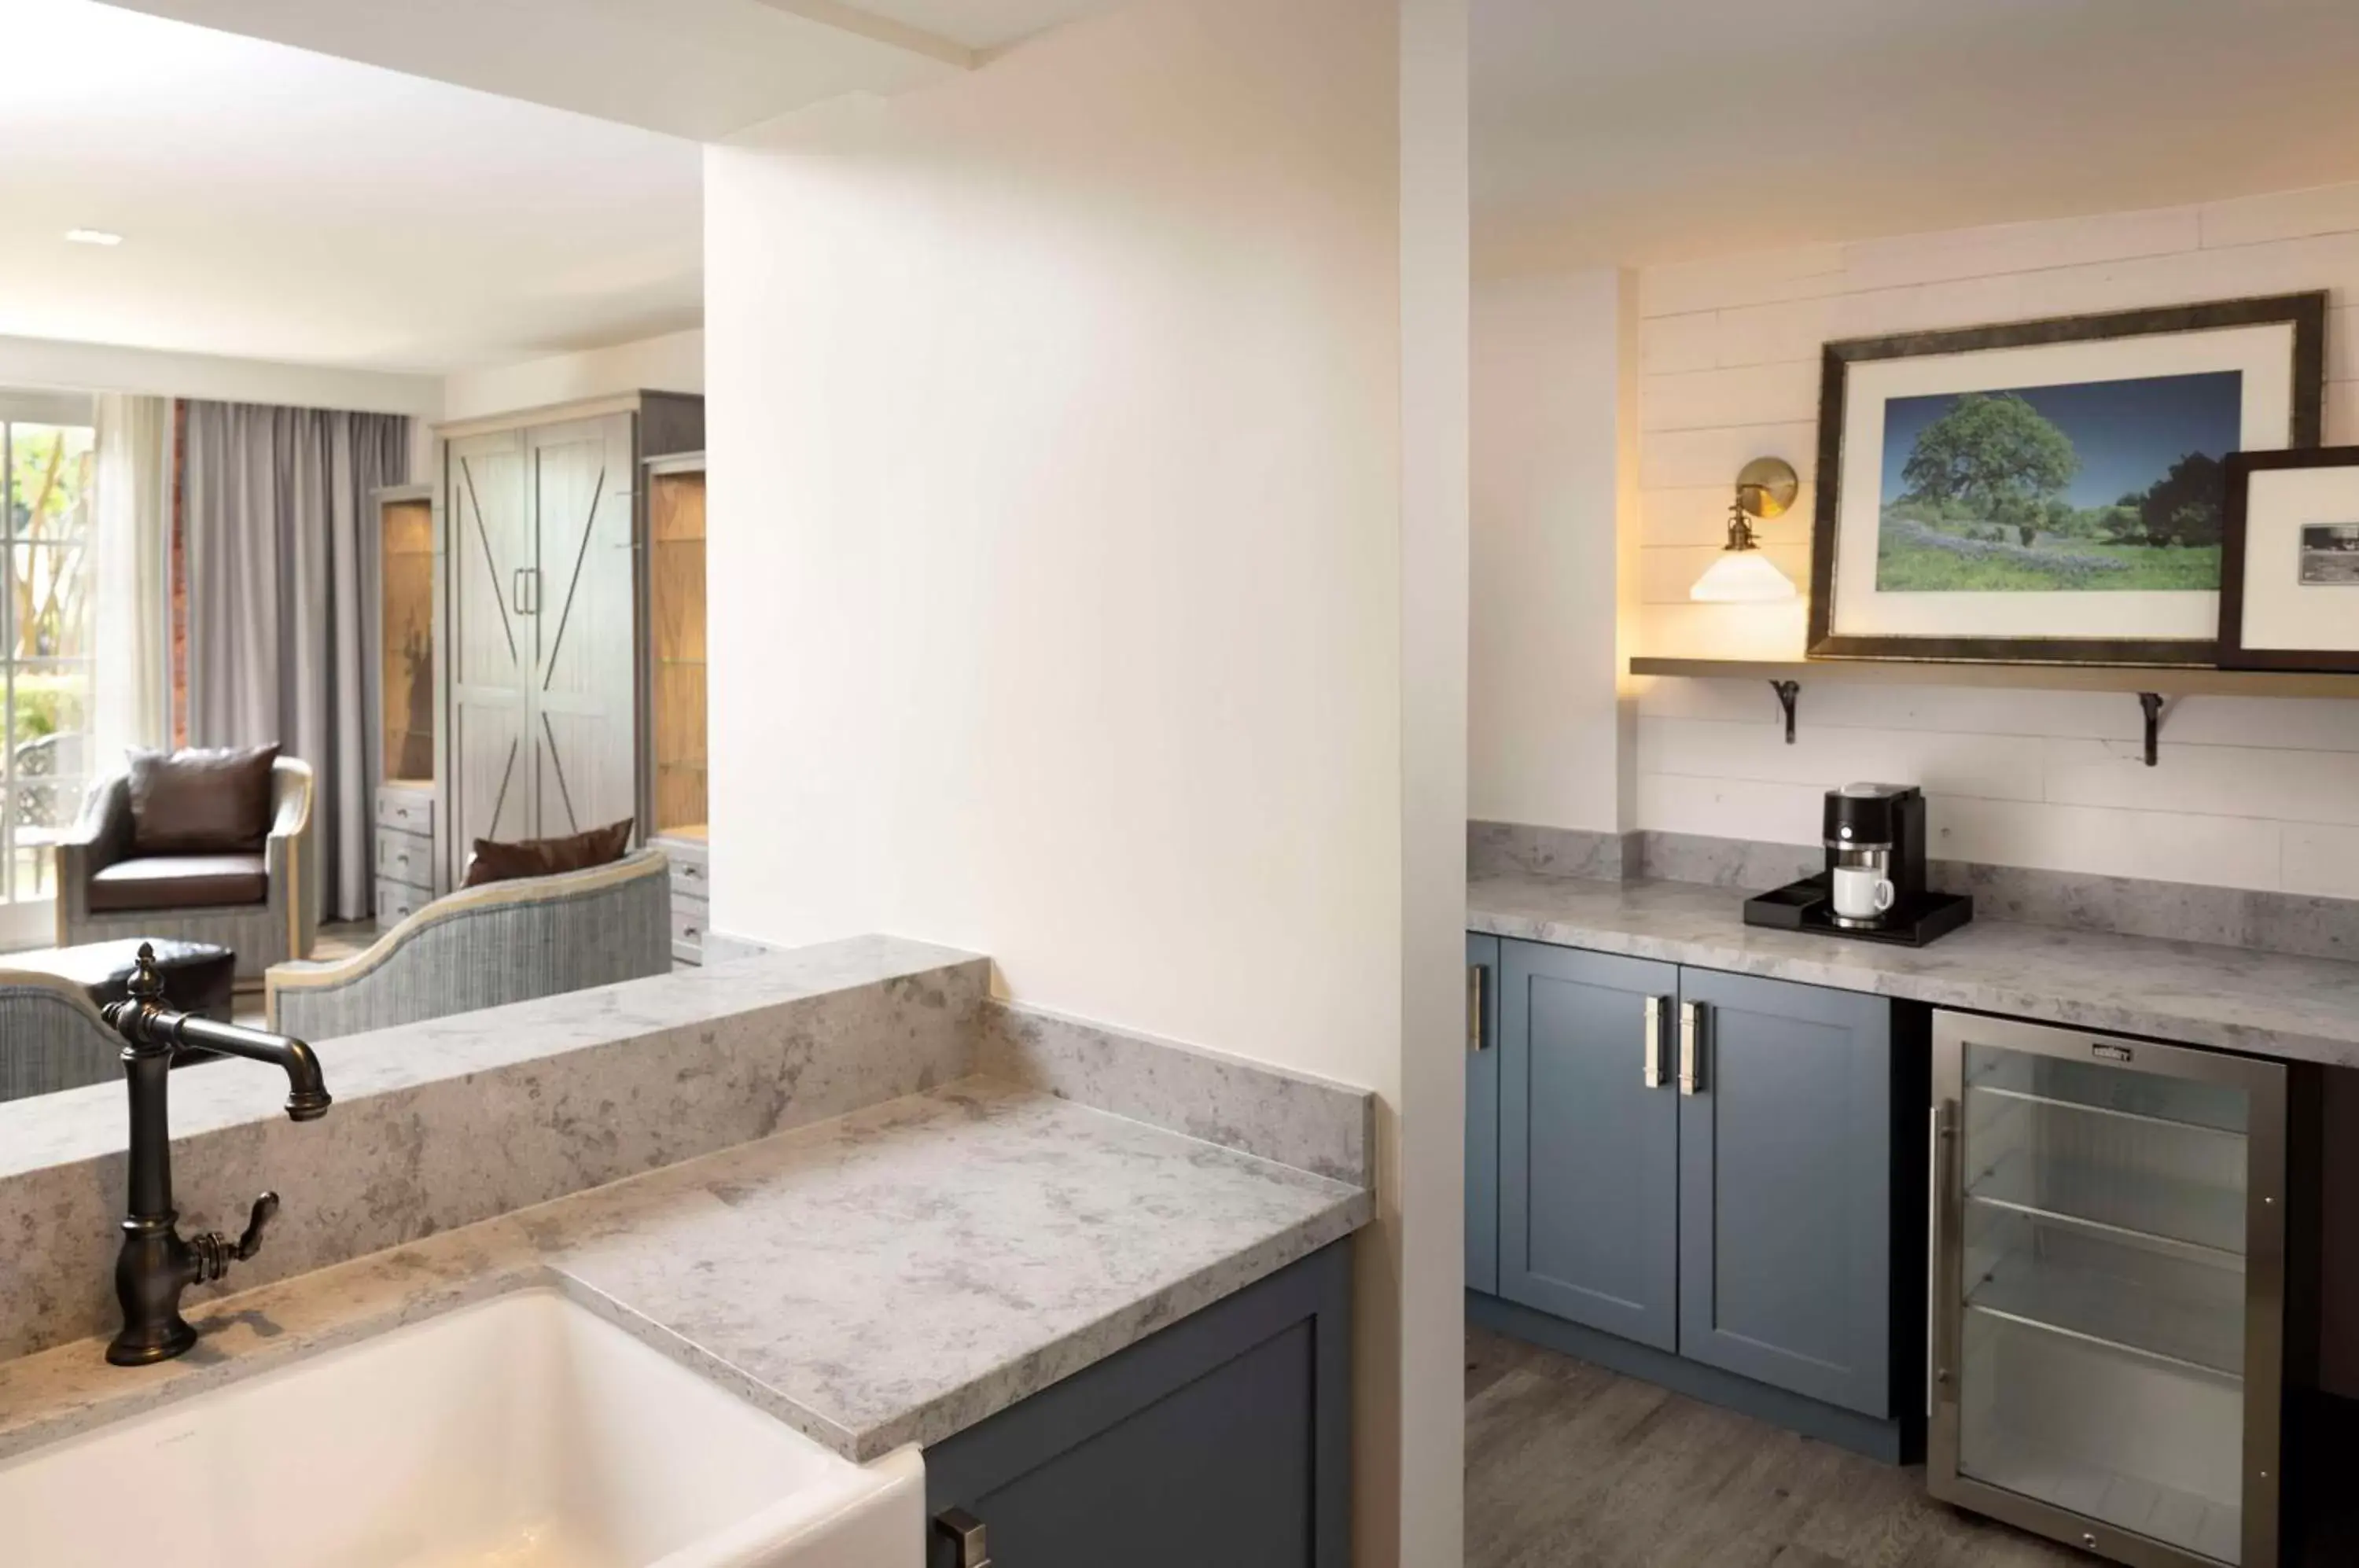 Photo of the whole room, Bathroom in Hyatt Regency Hill Country Resort & Spa